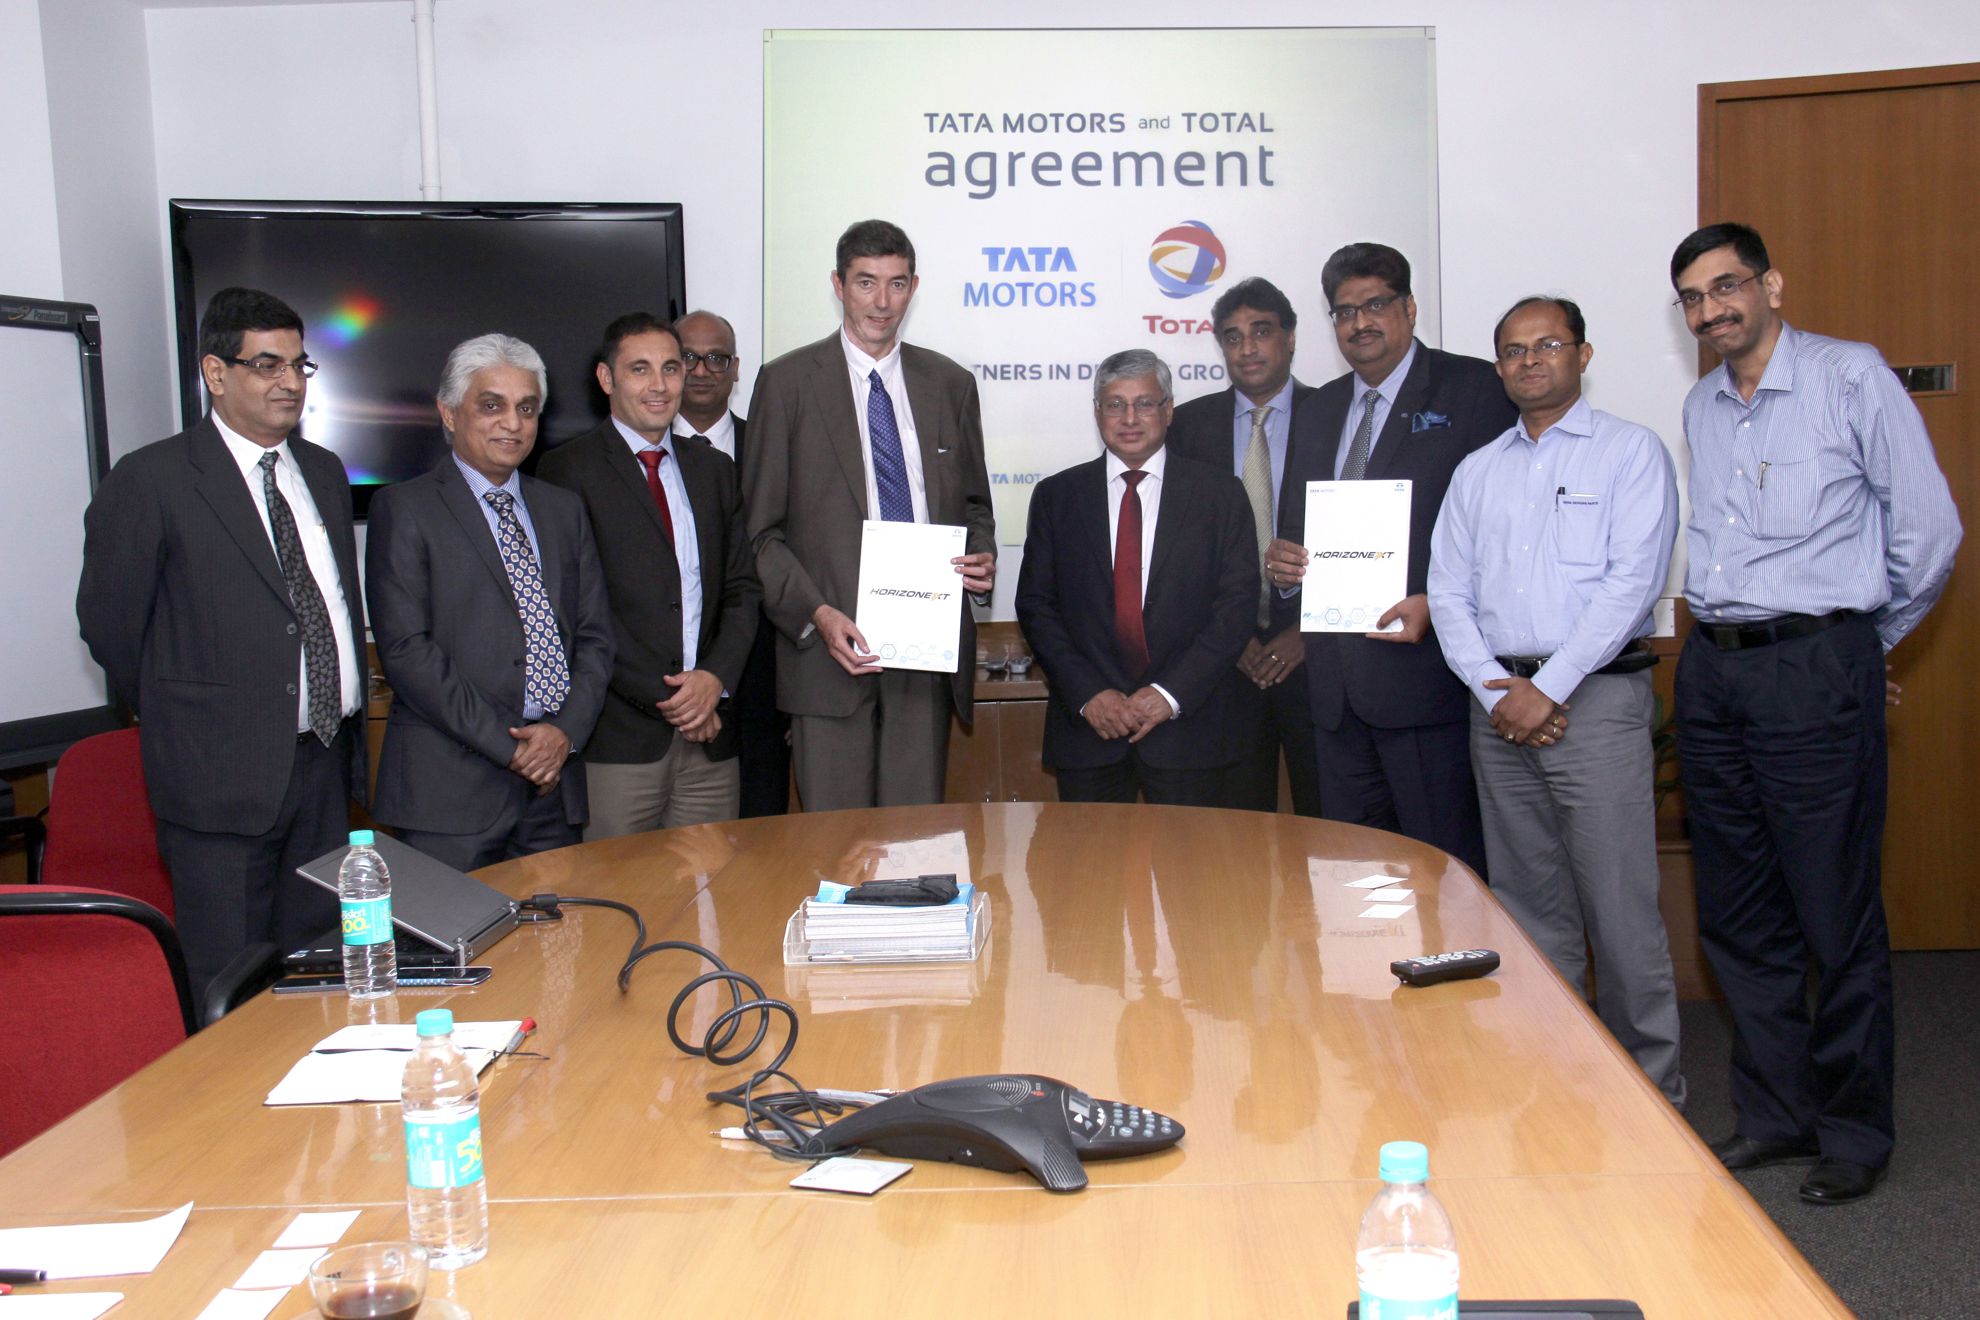 Tata Motors signs global agreement with Total Lubrifiants